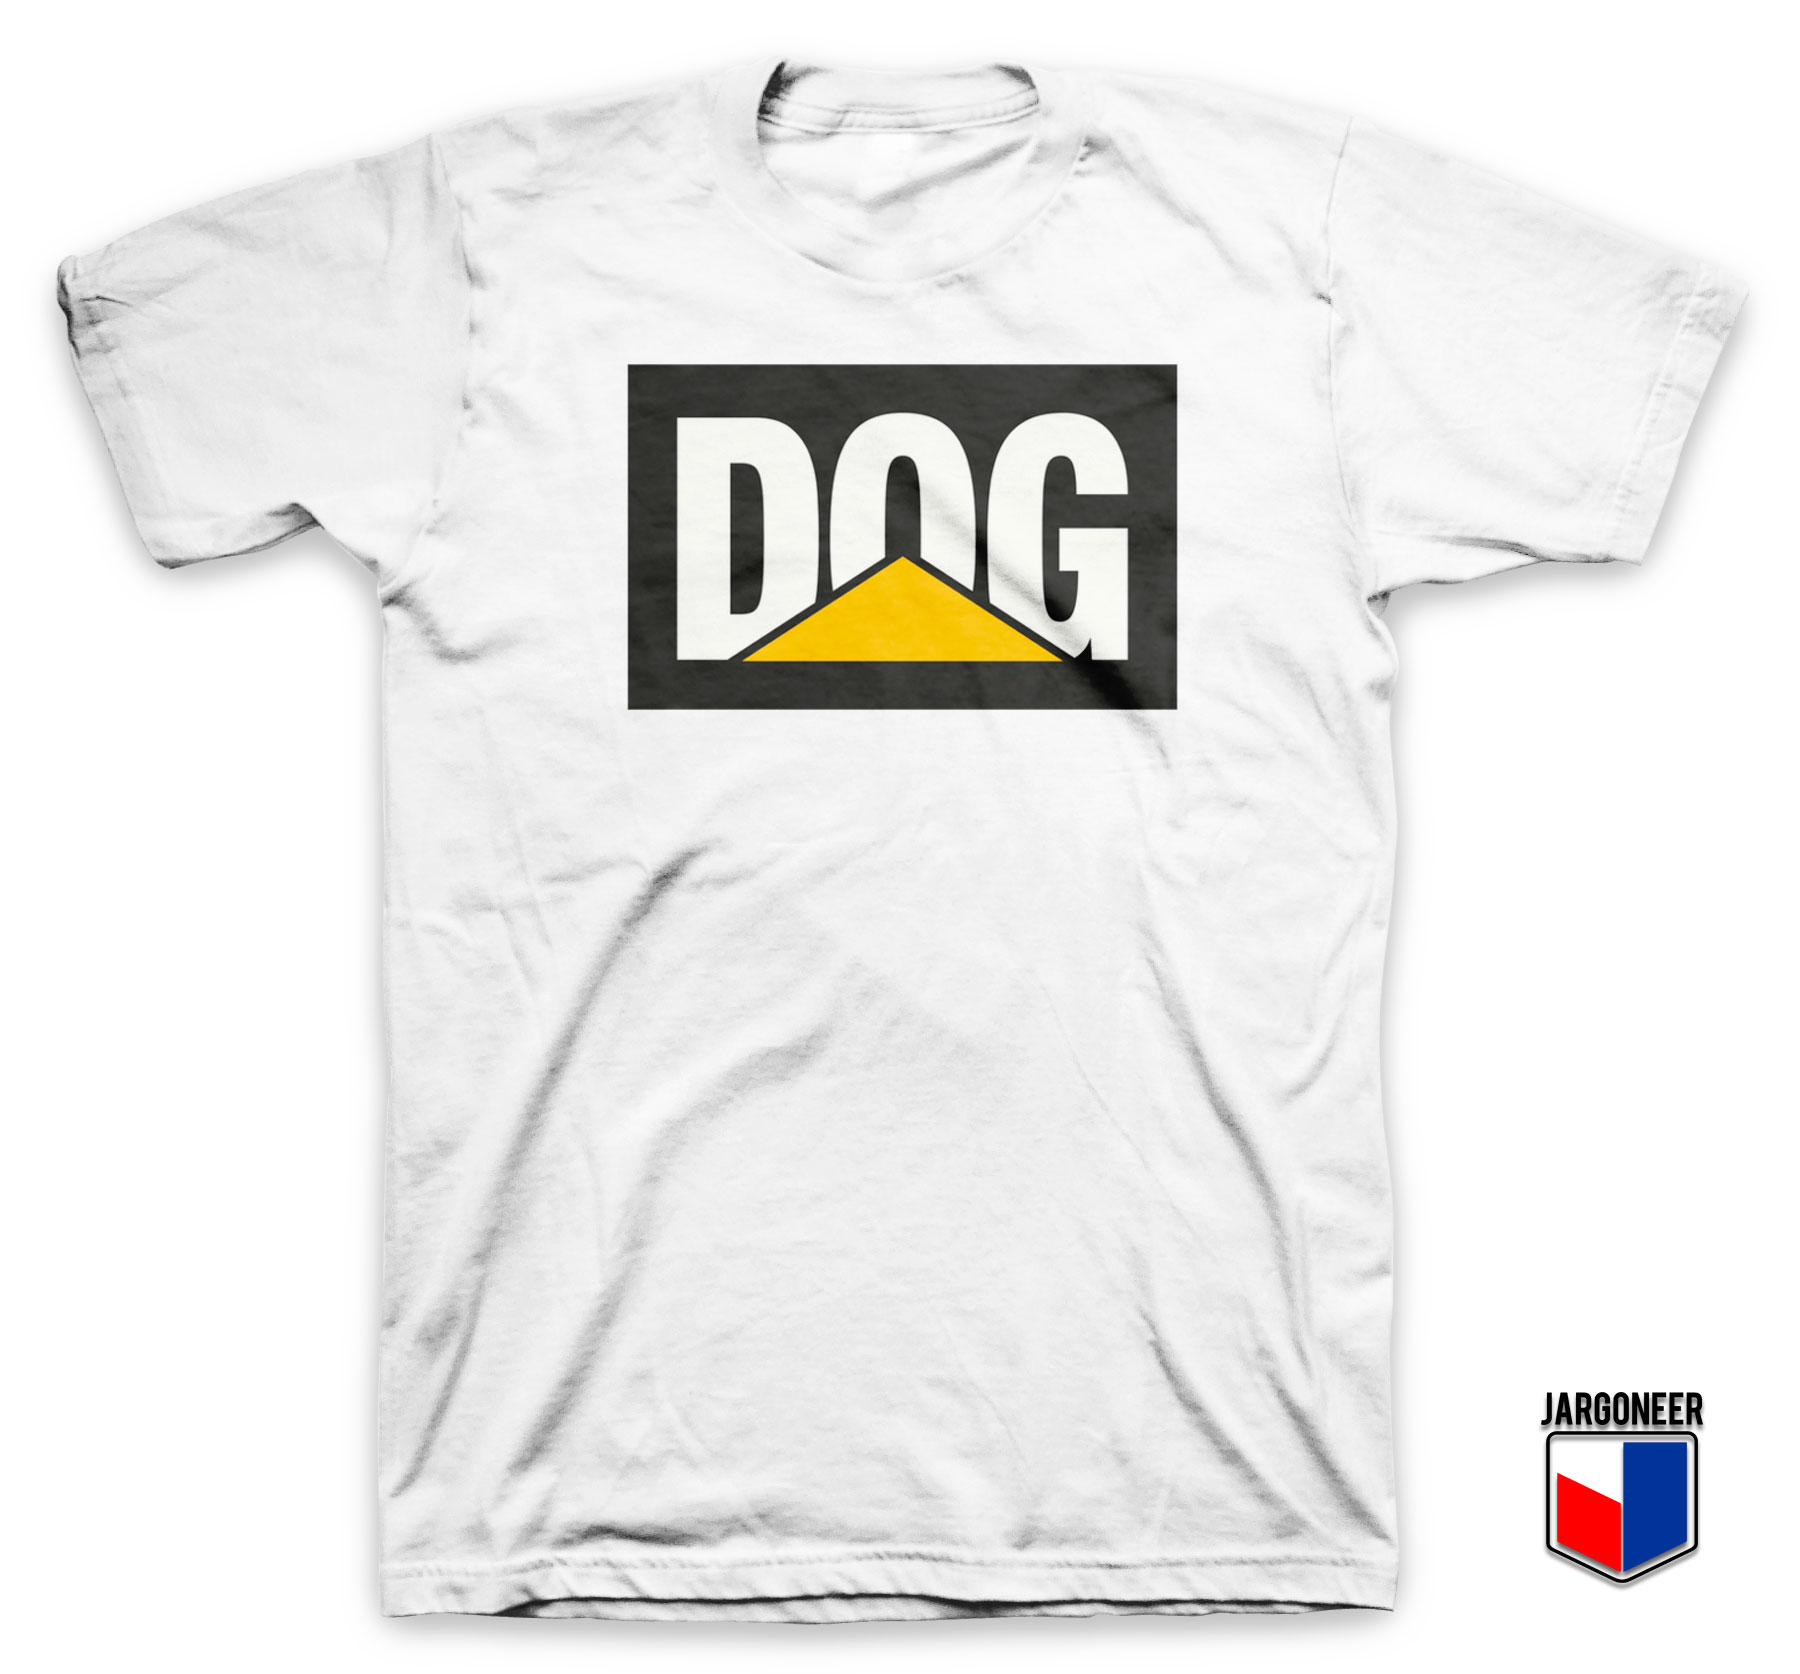 Dog Caterpillar Parody T Shirt - Shop Unique Graphic Cool Shirt Designs